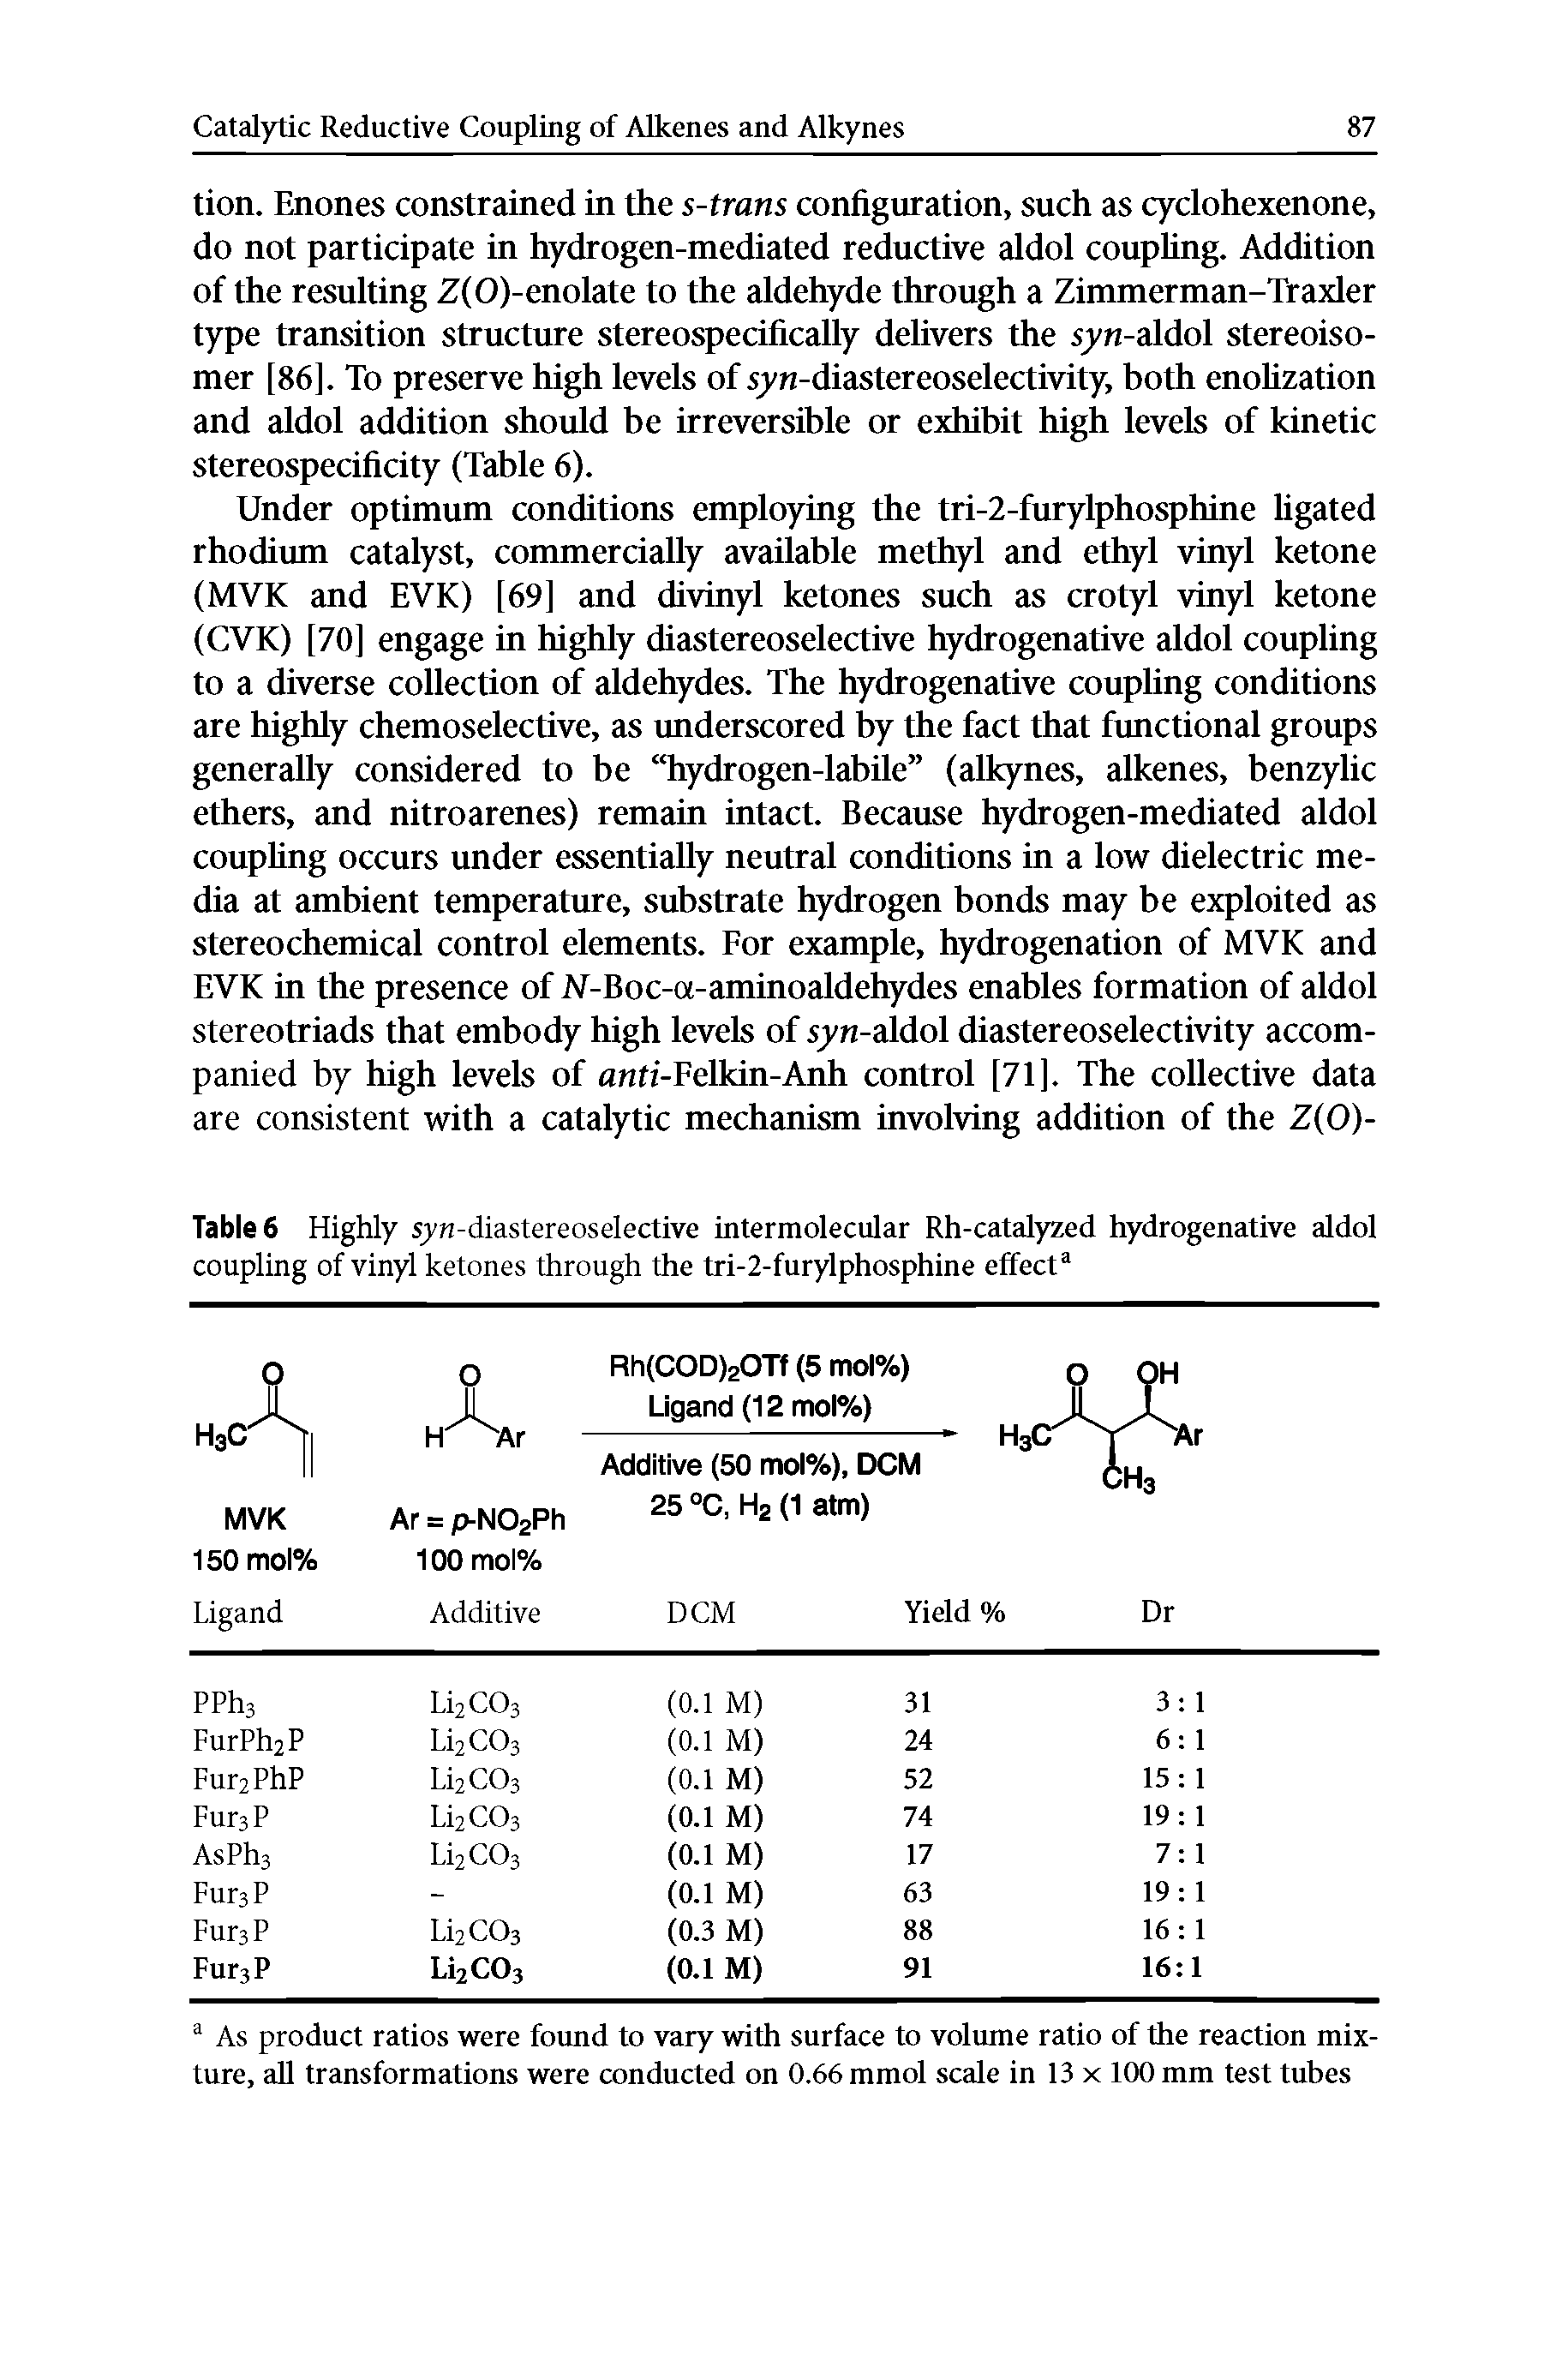 Table6 Highly syn-diastereoselective intermolecular Rh-catalyzed hydrogenative aldol coupling of vinyl ketones through the tri-2-furylphosphine effect3...